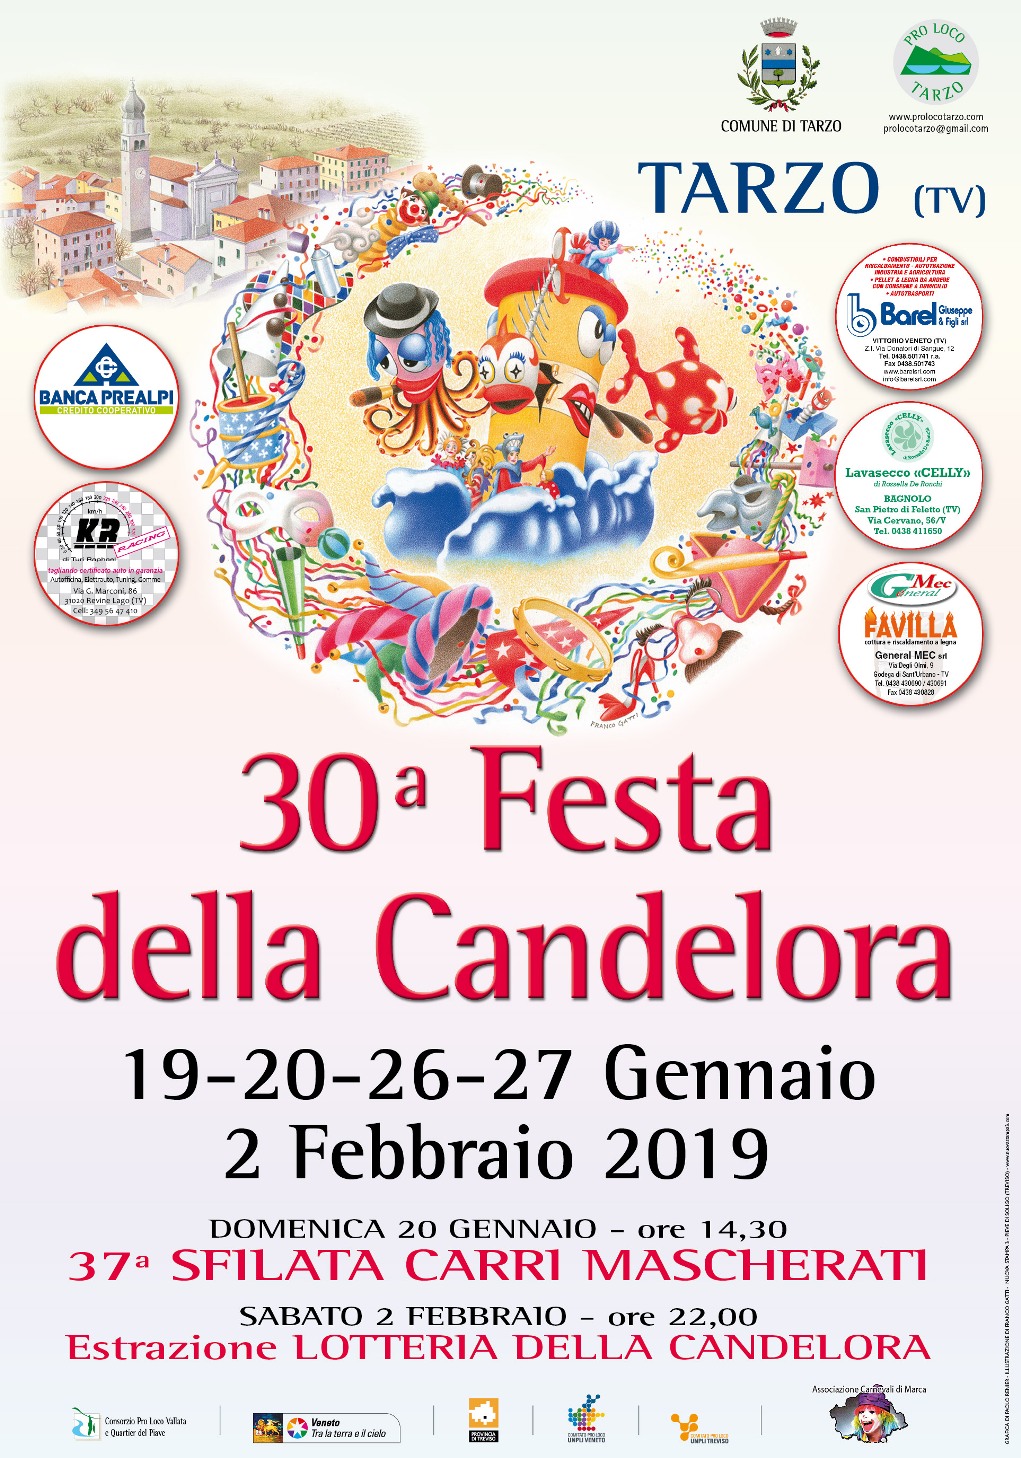 Candelora manifesto 70x100-01